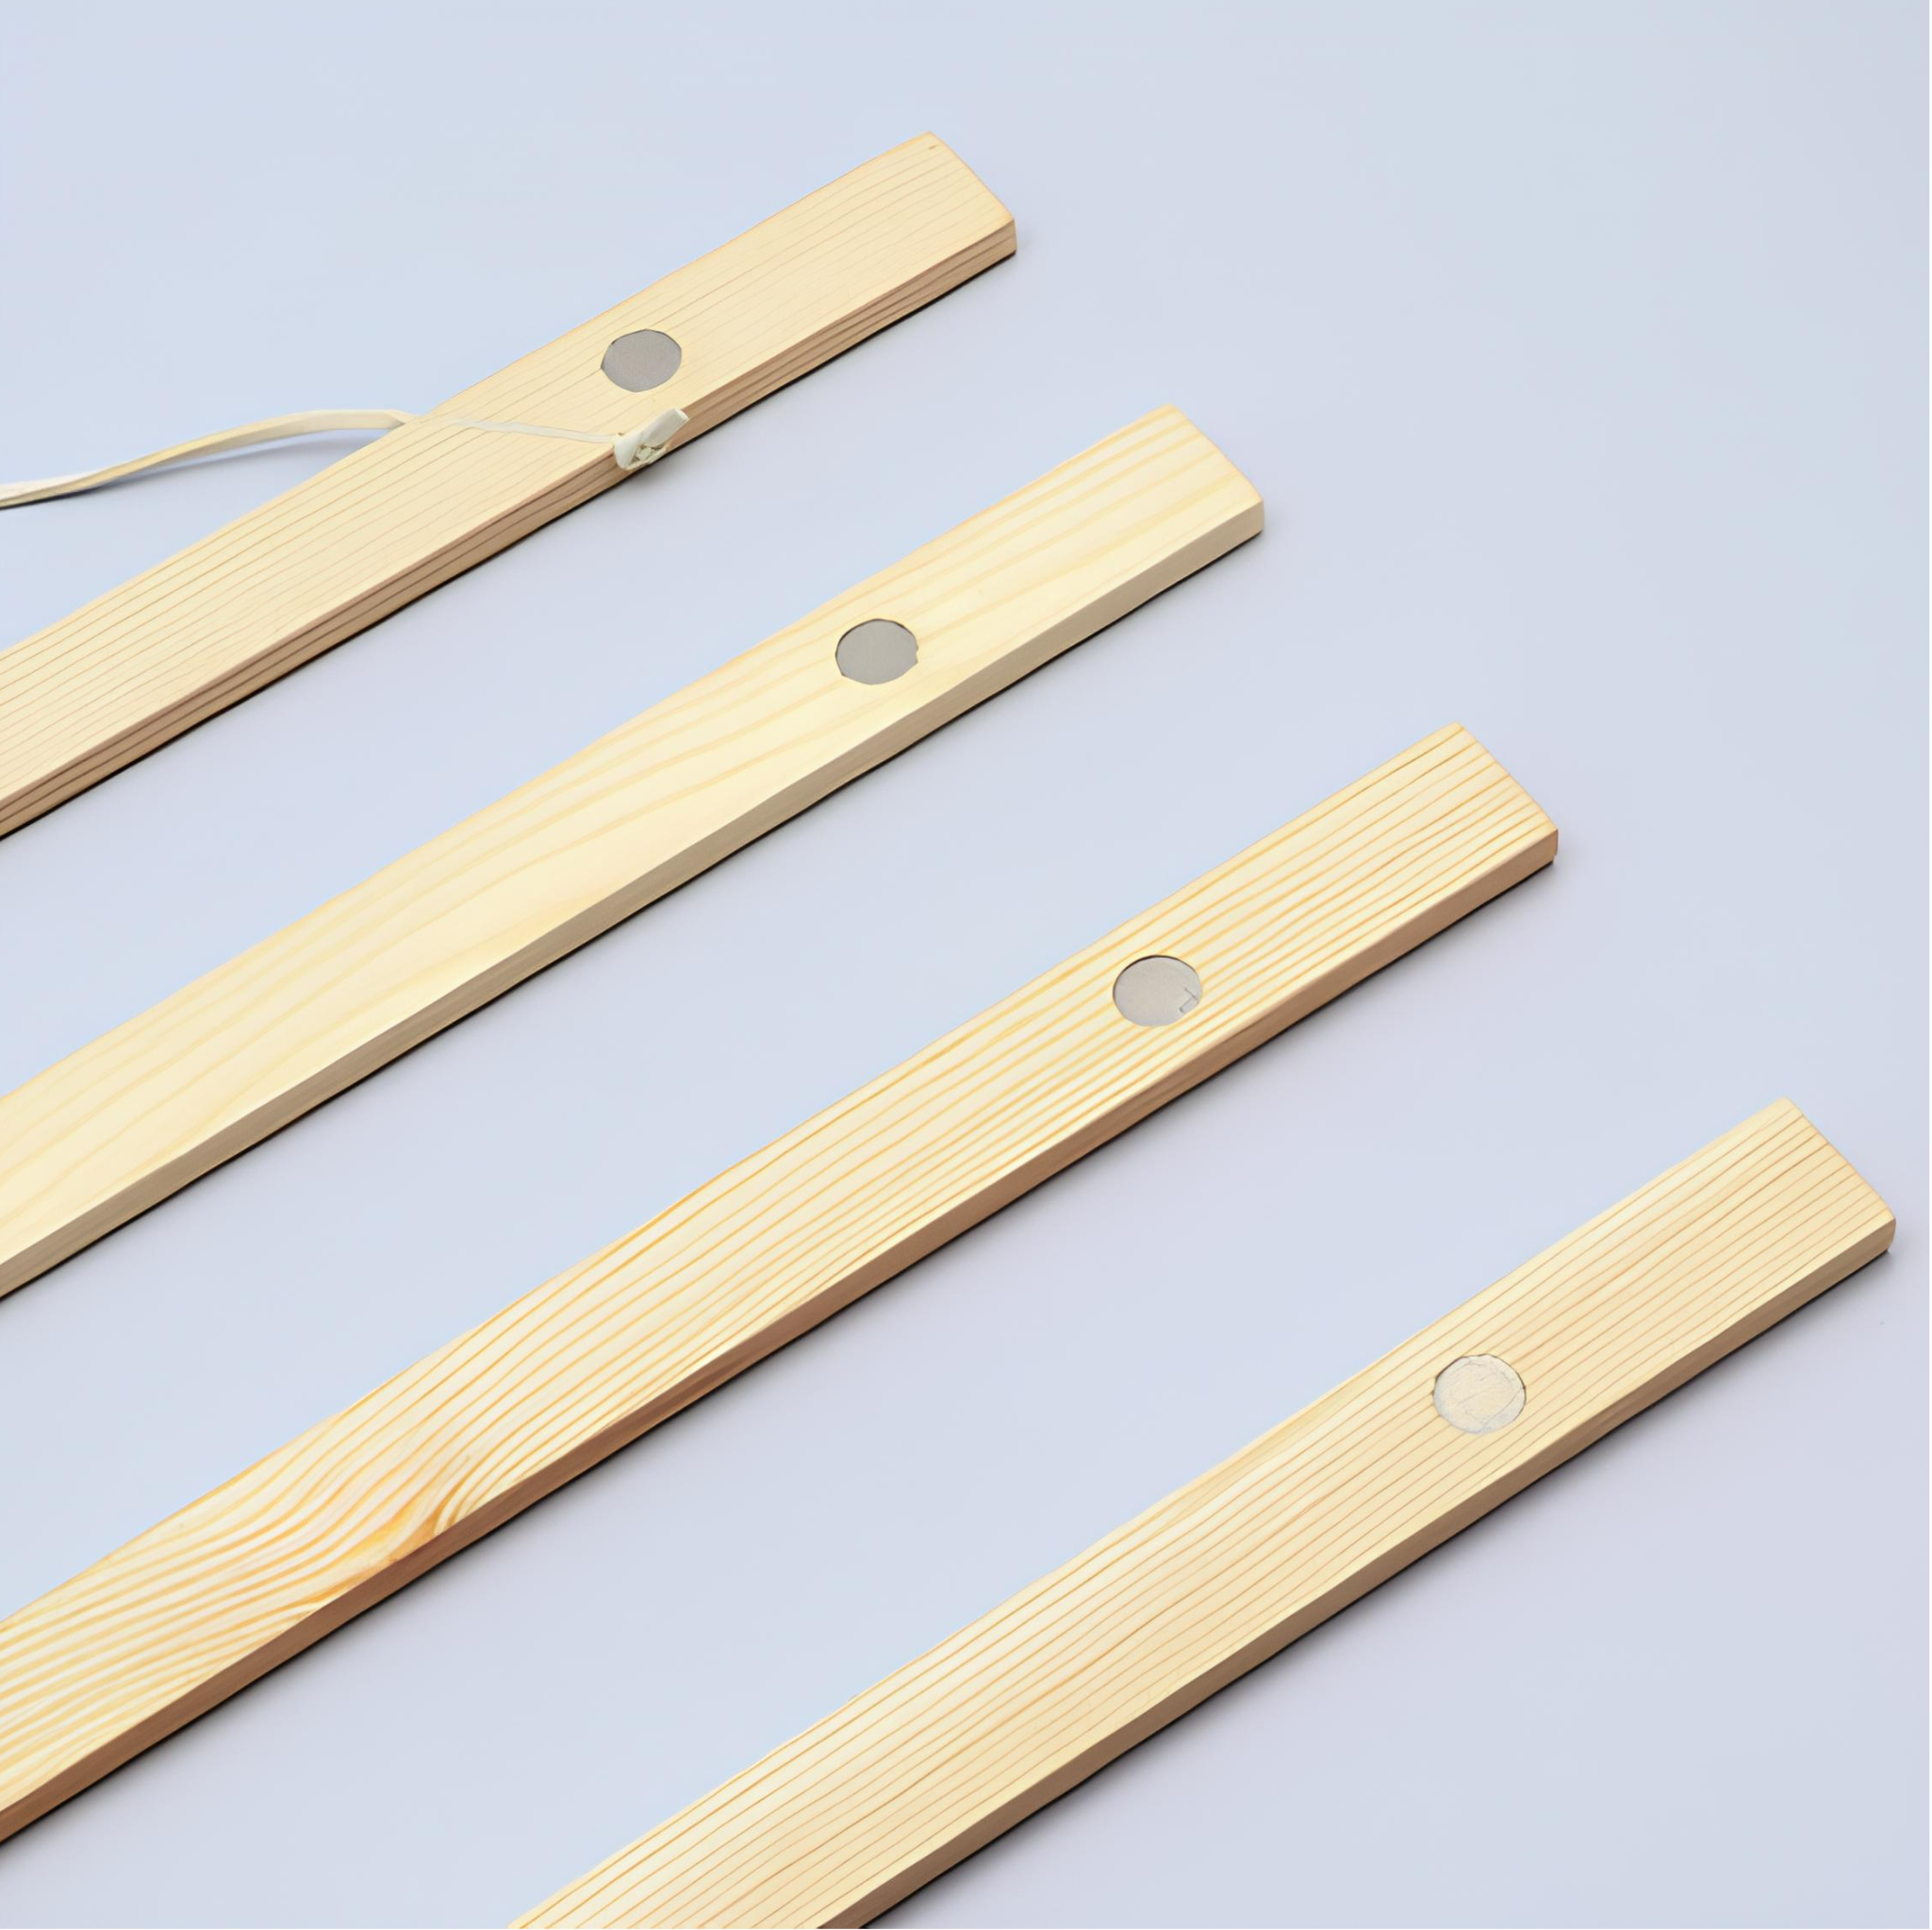 Wooden magnetic hanger for calendars. A0size_vertical. 122cm